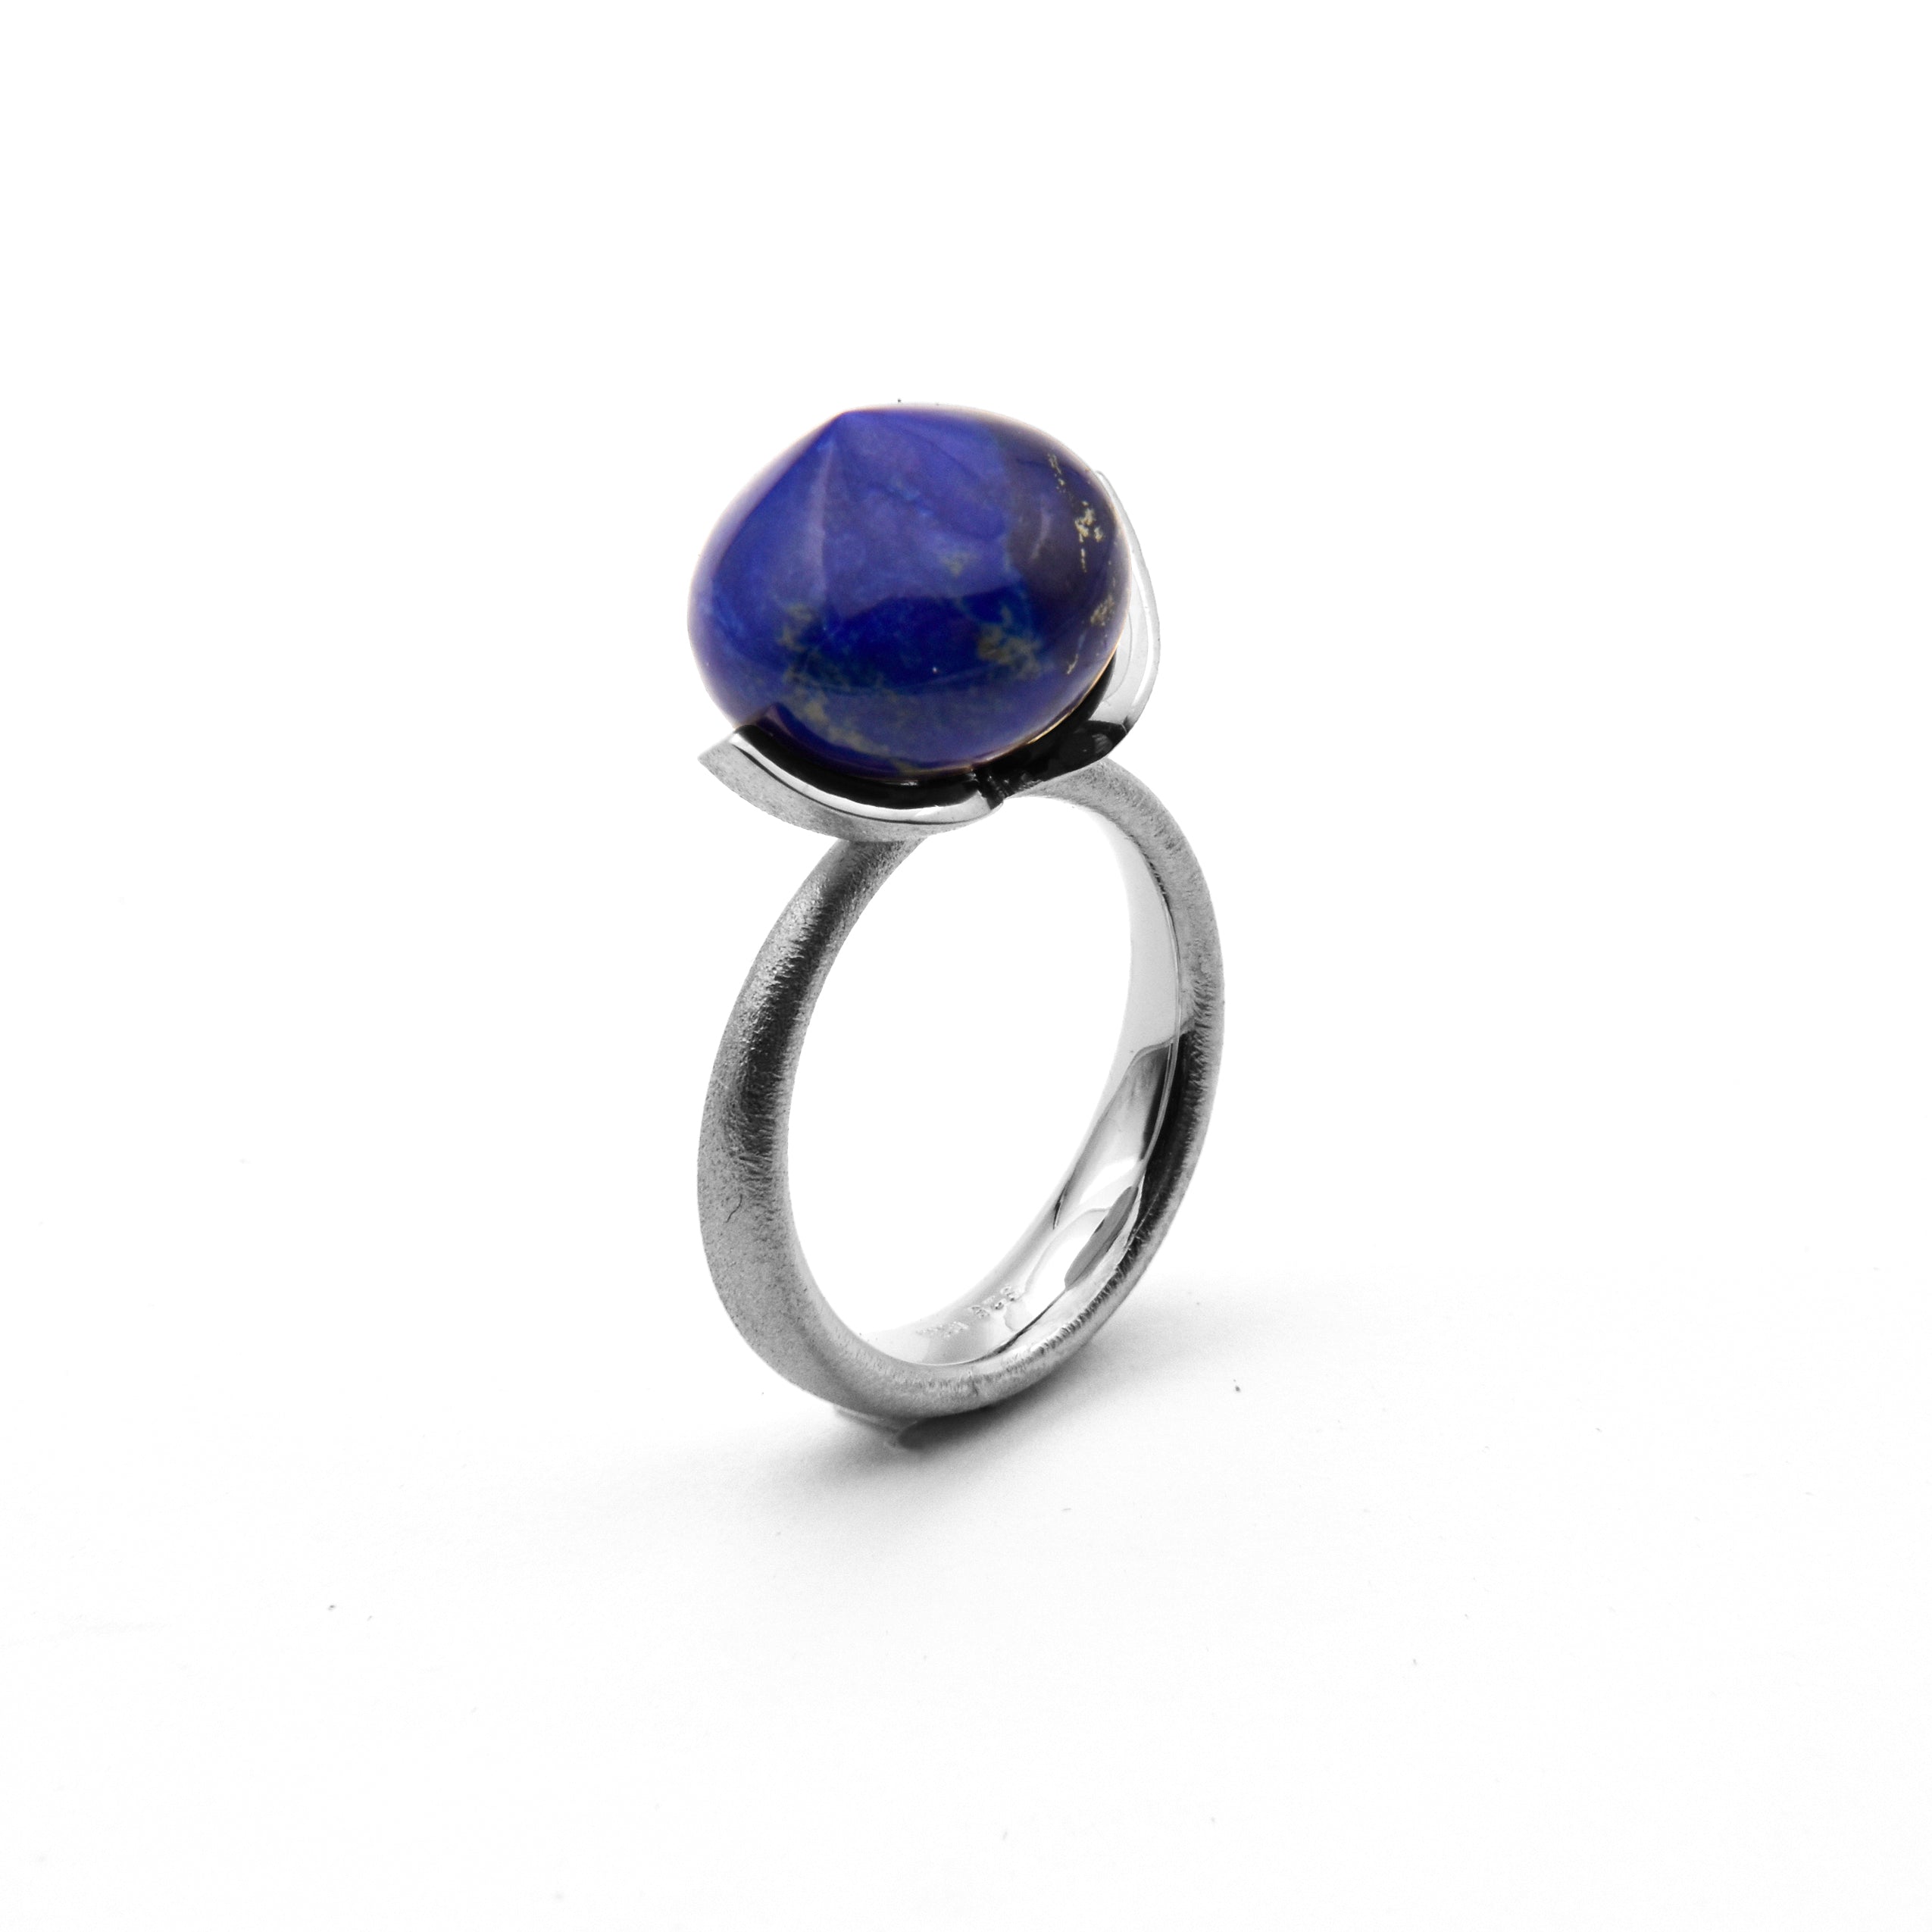 Dolce ring "big" with lapis lazuli 925/-